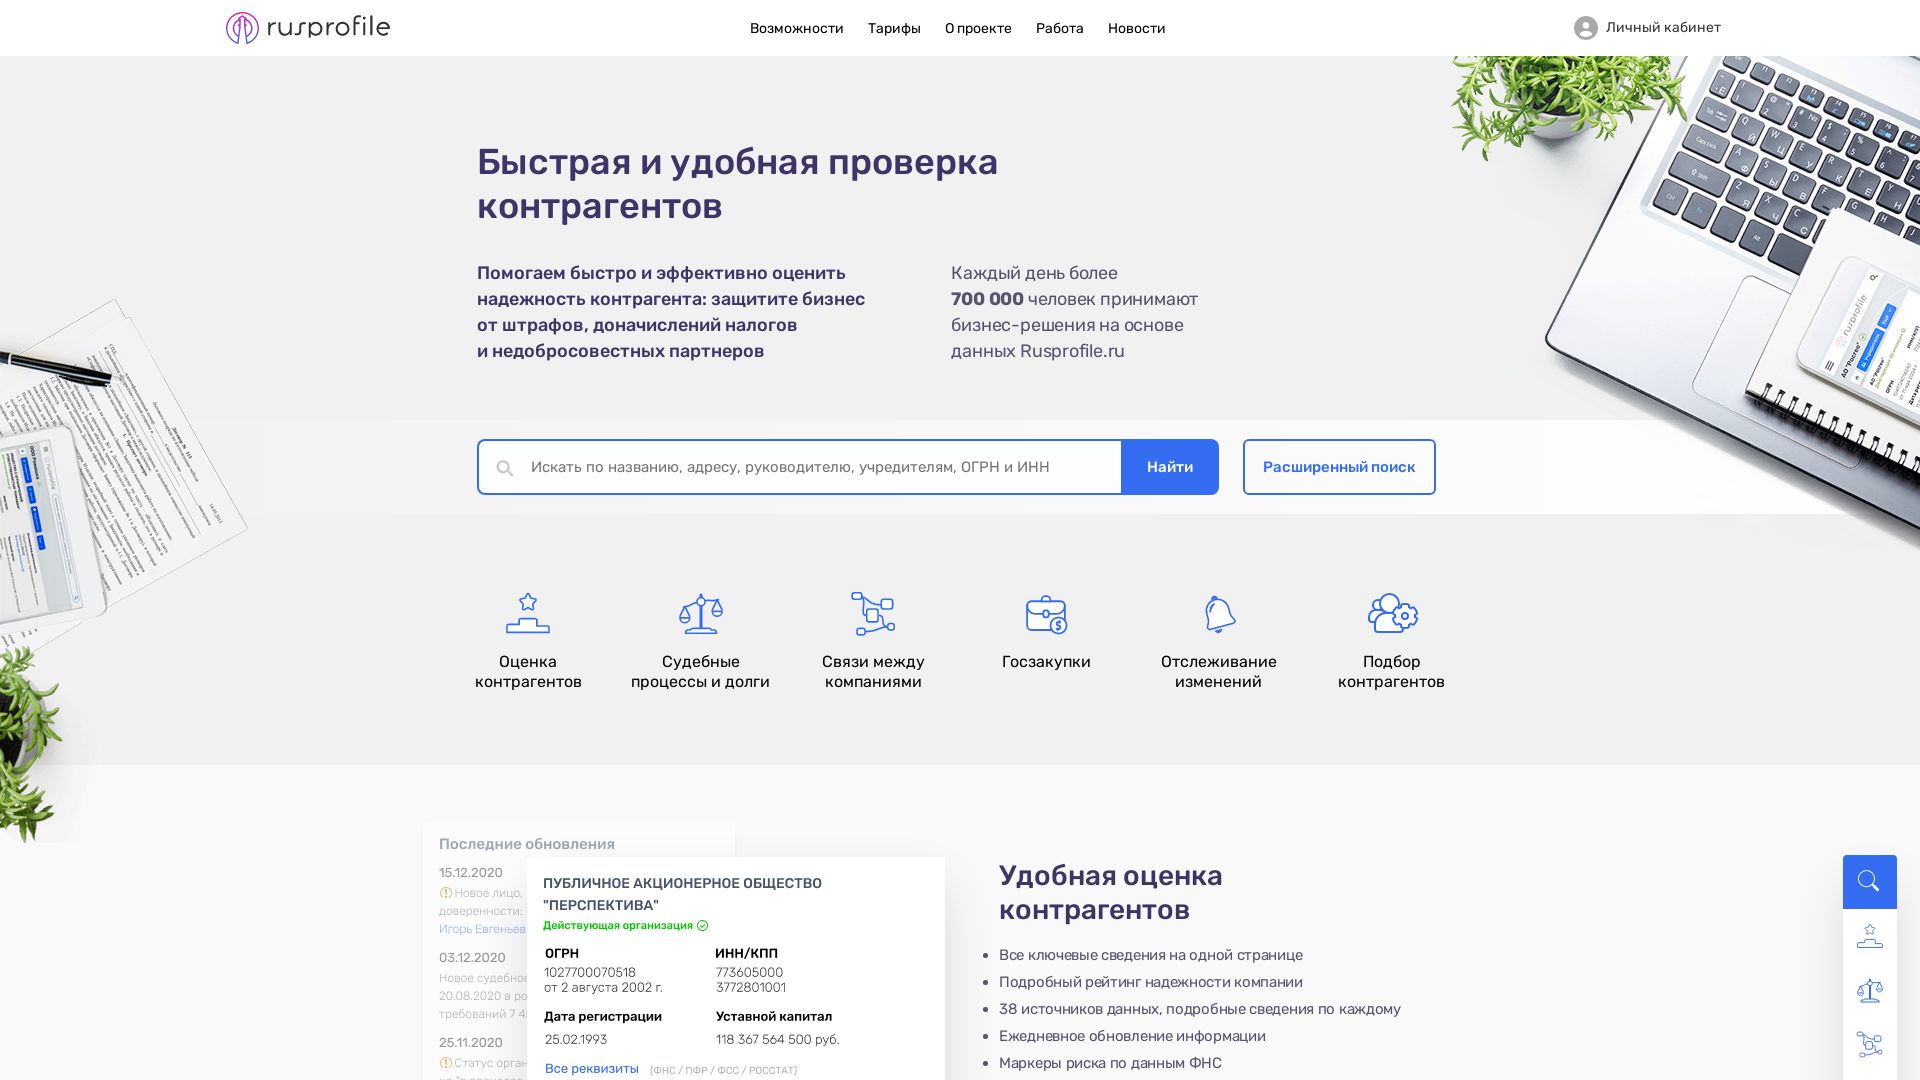 Status do site rusprofile.ru está   ONLINE